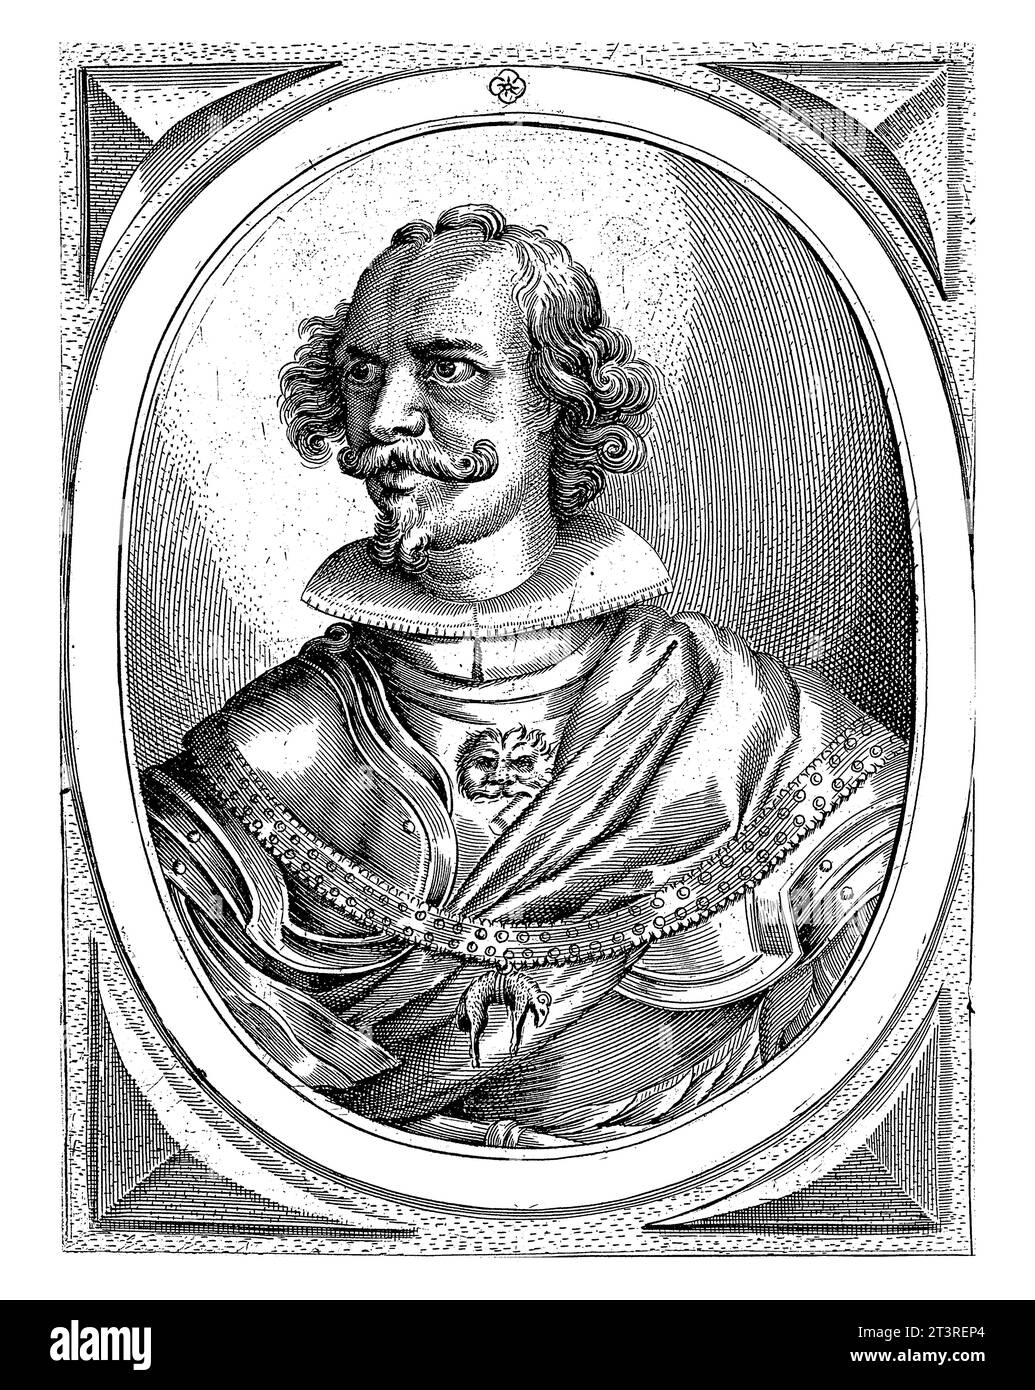 Portret van Francesco Filomarino, prins van Rocca d'aspro, Giovanni Merlo, c. 1636 - c. 1699, inciso d'epoca. Foto Stock